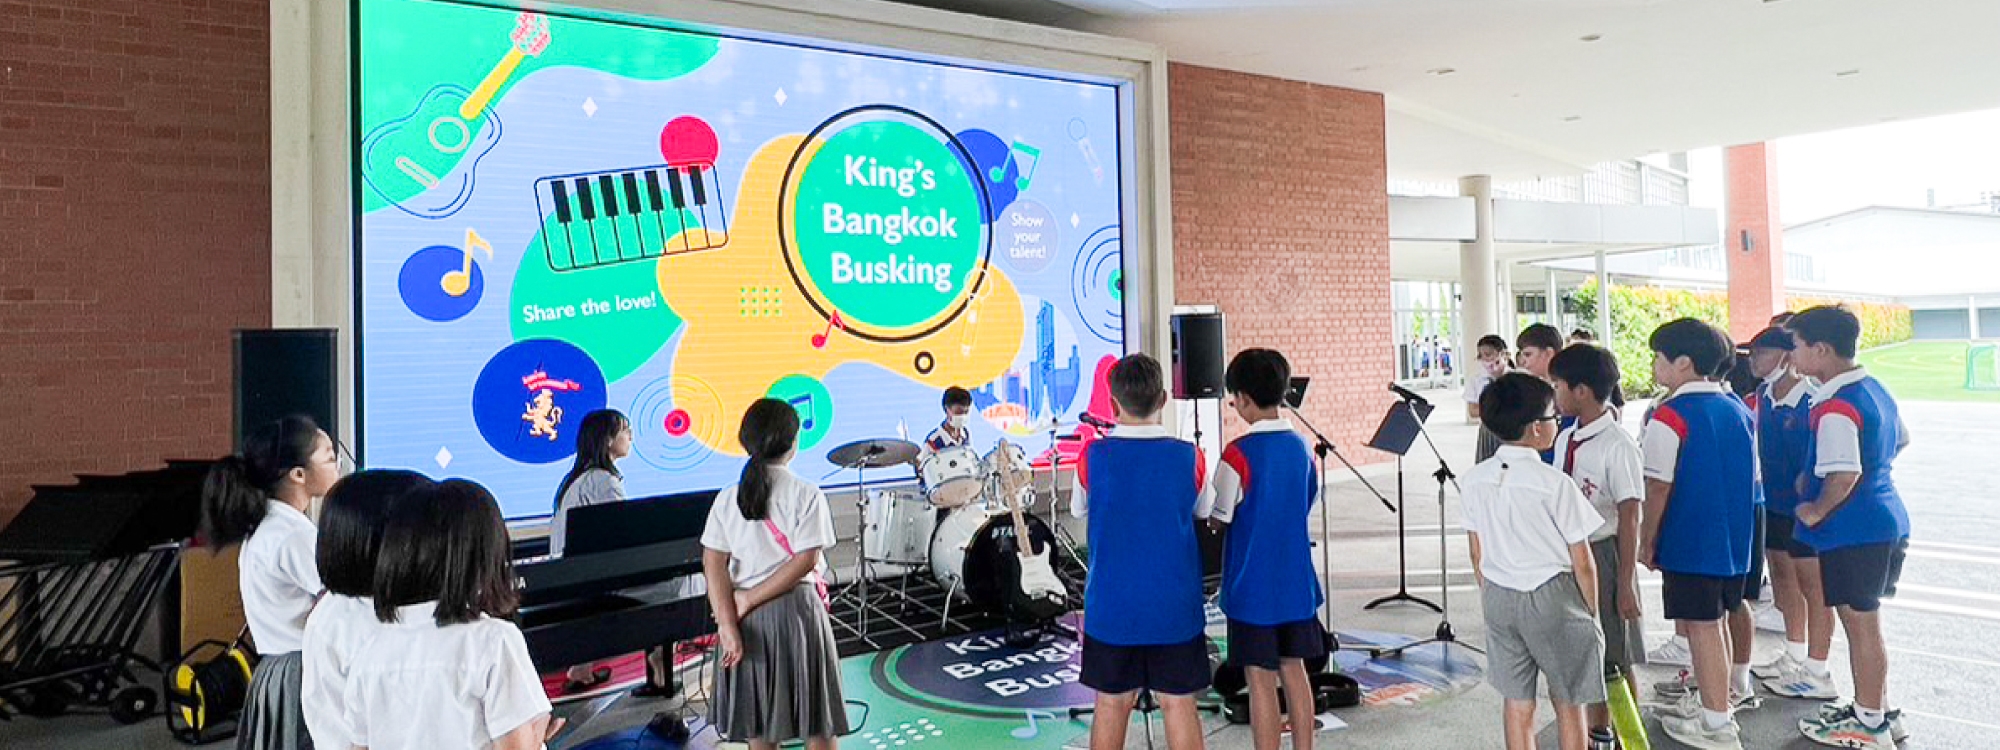 Sharing the love in the Busking Week at King’s Bangkok